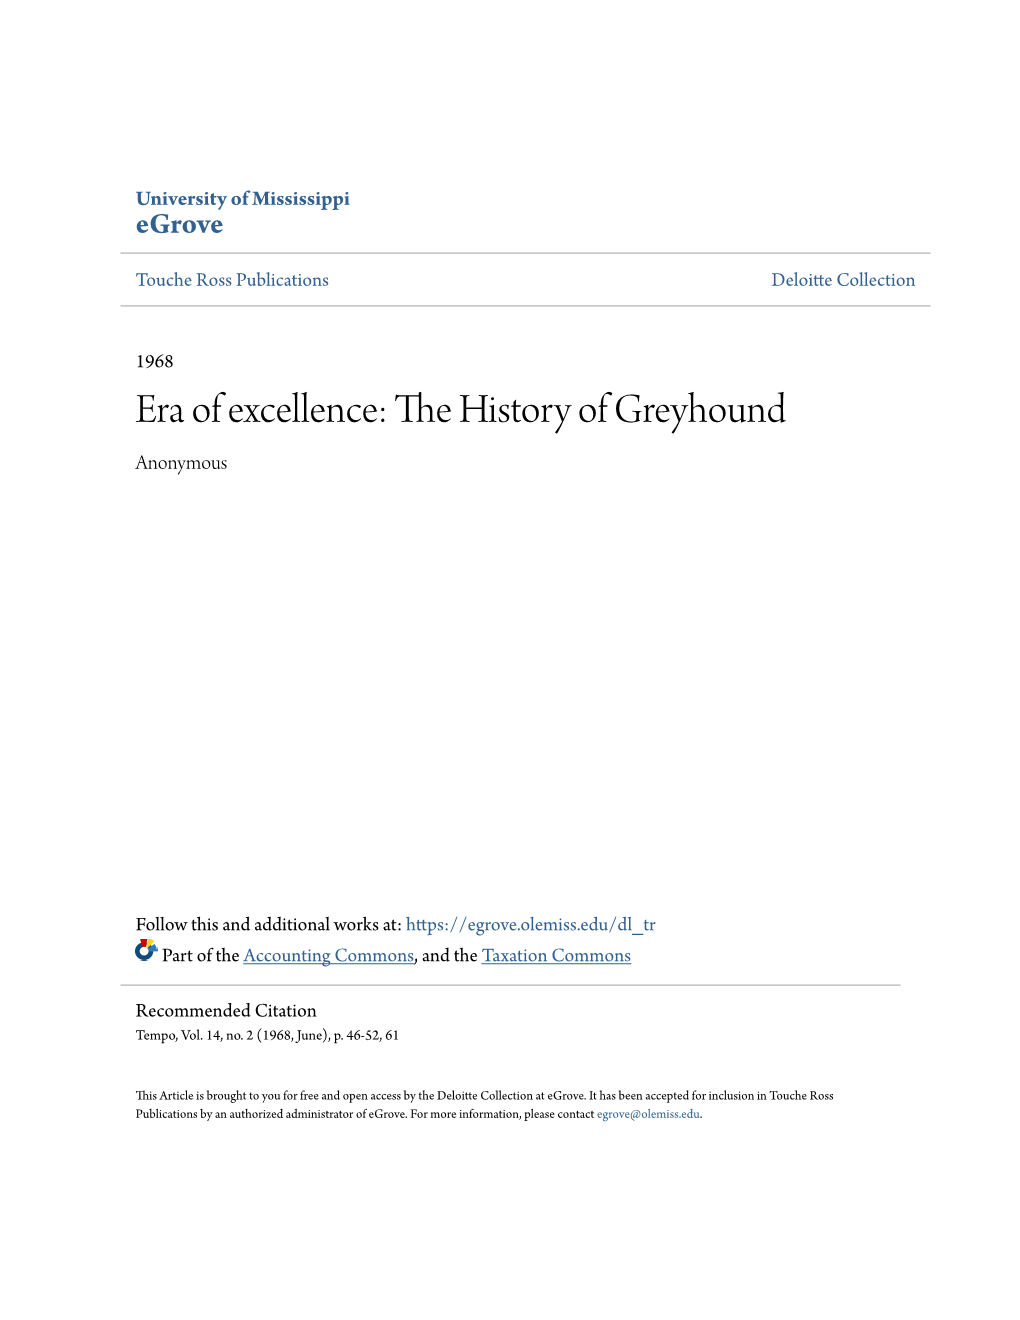 The History of Greyhound